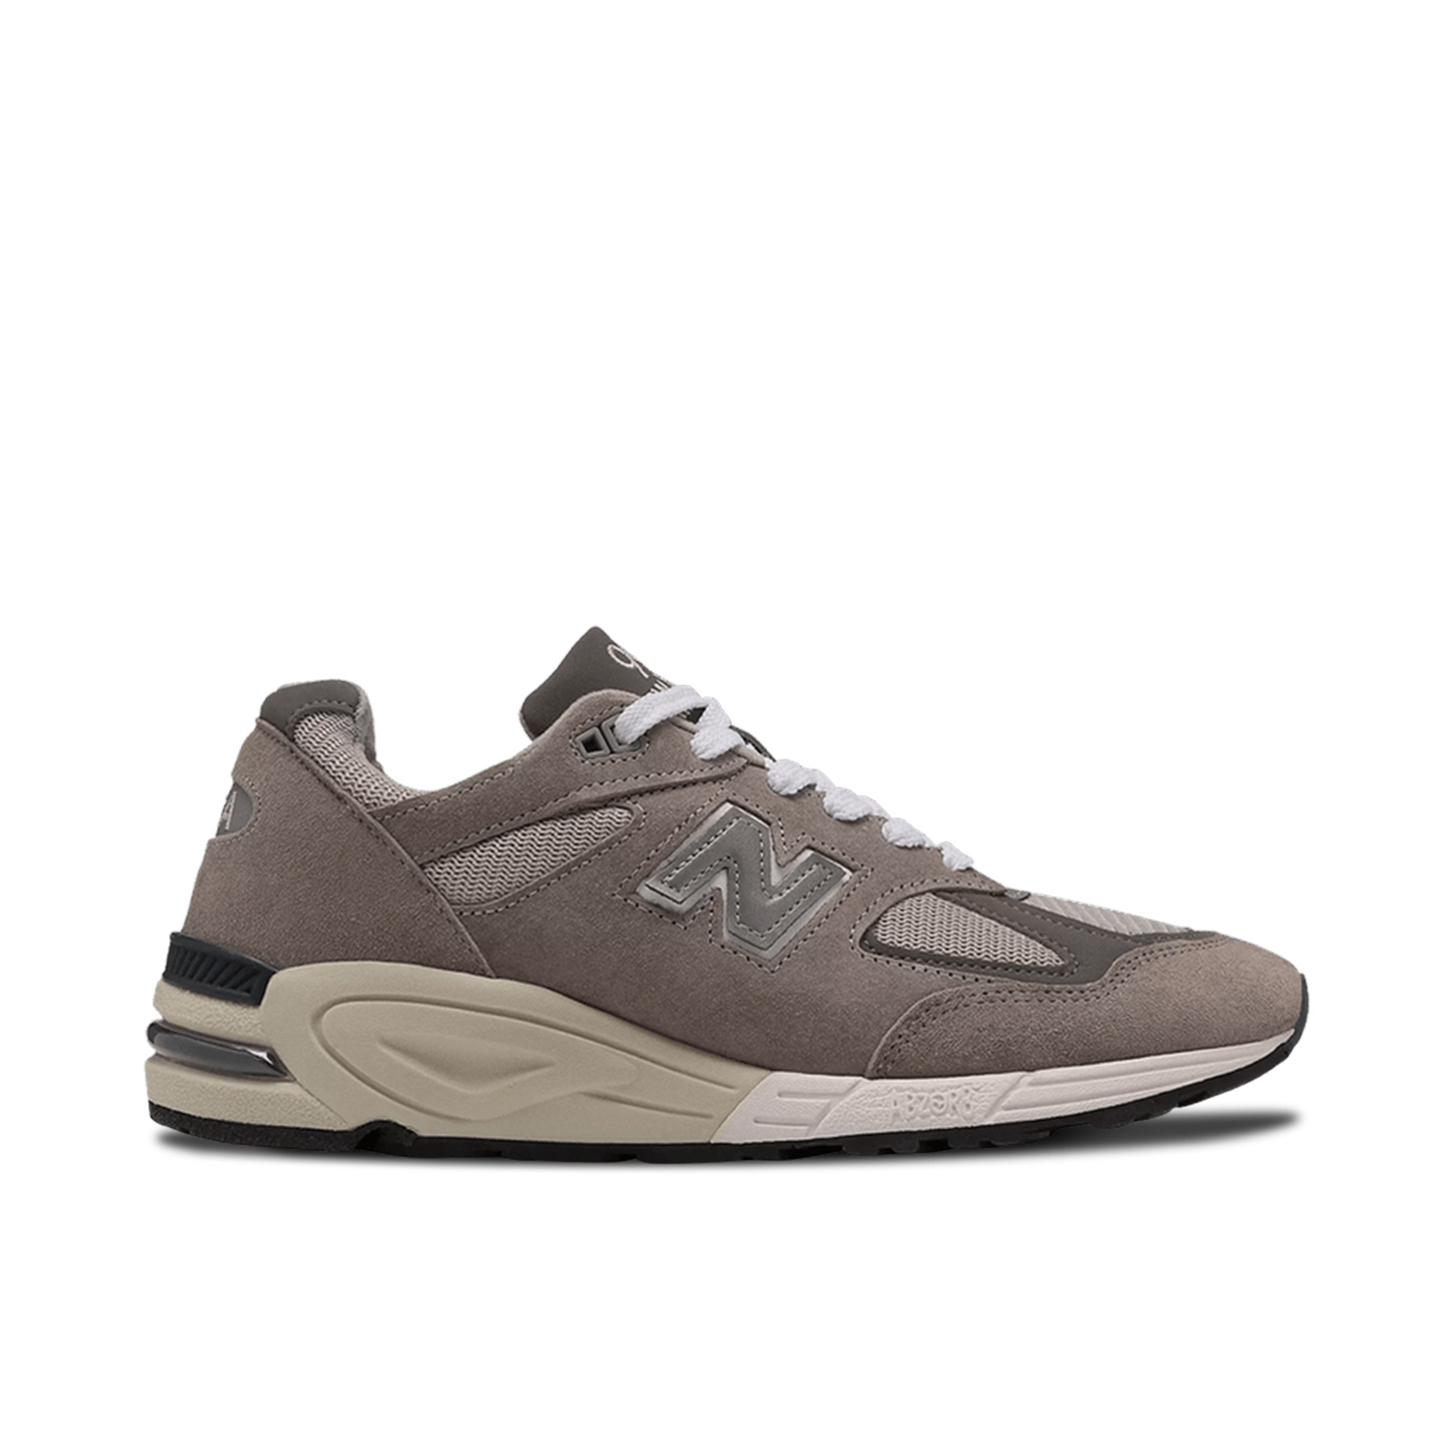 New Balance 580 “Brown” 27.5